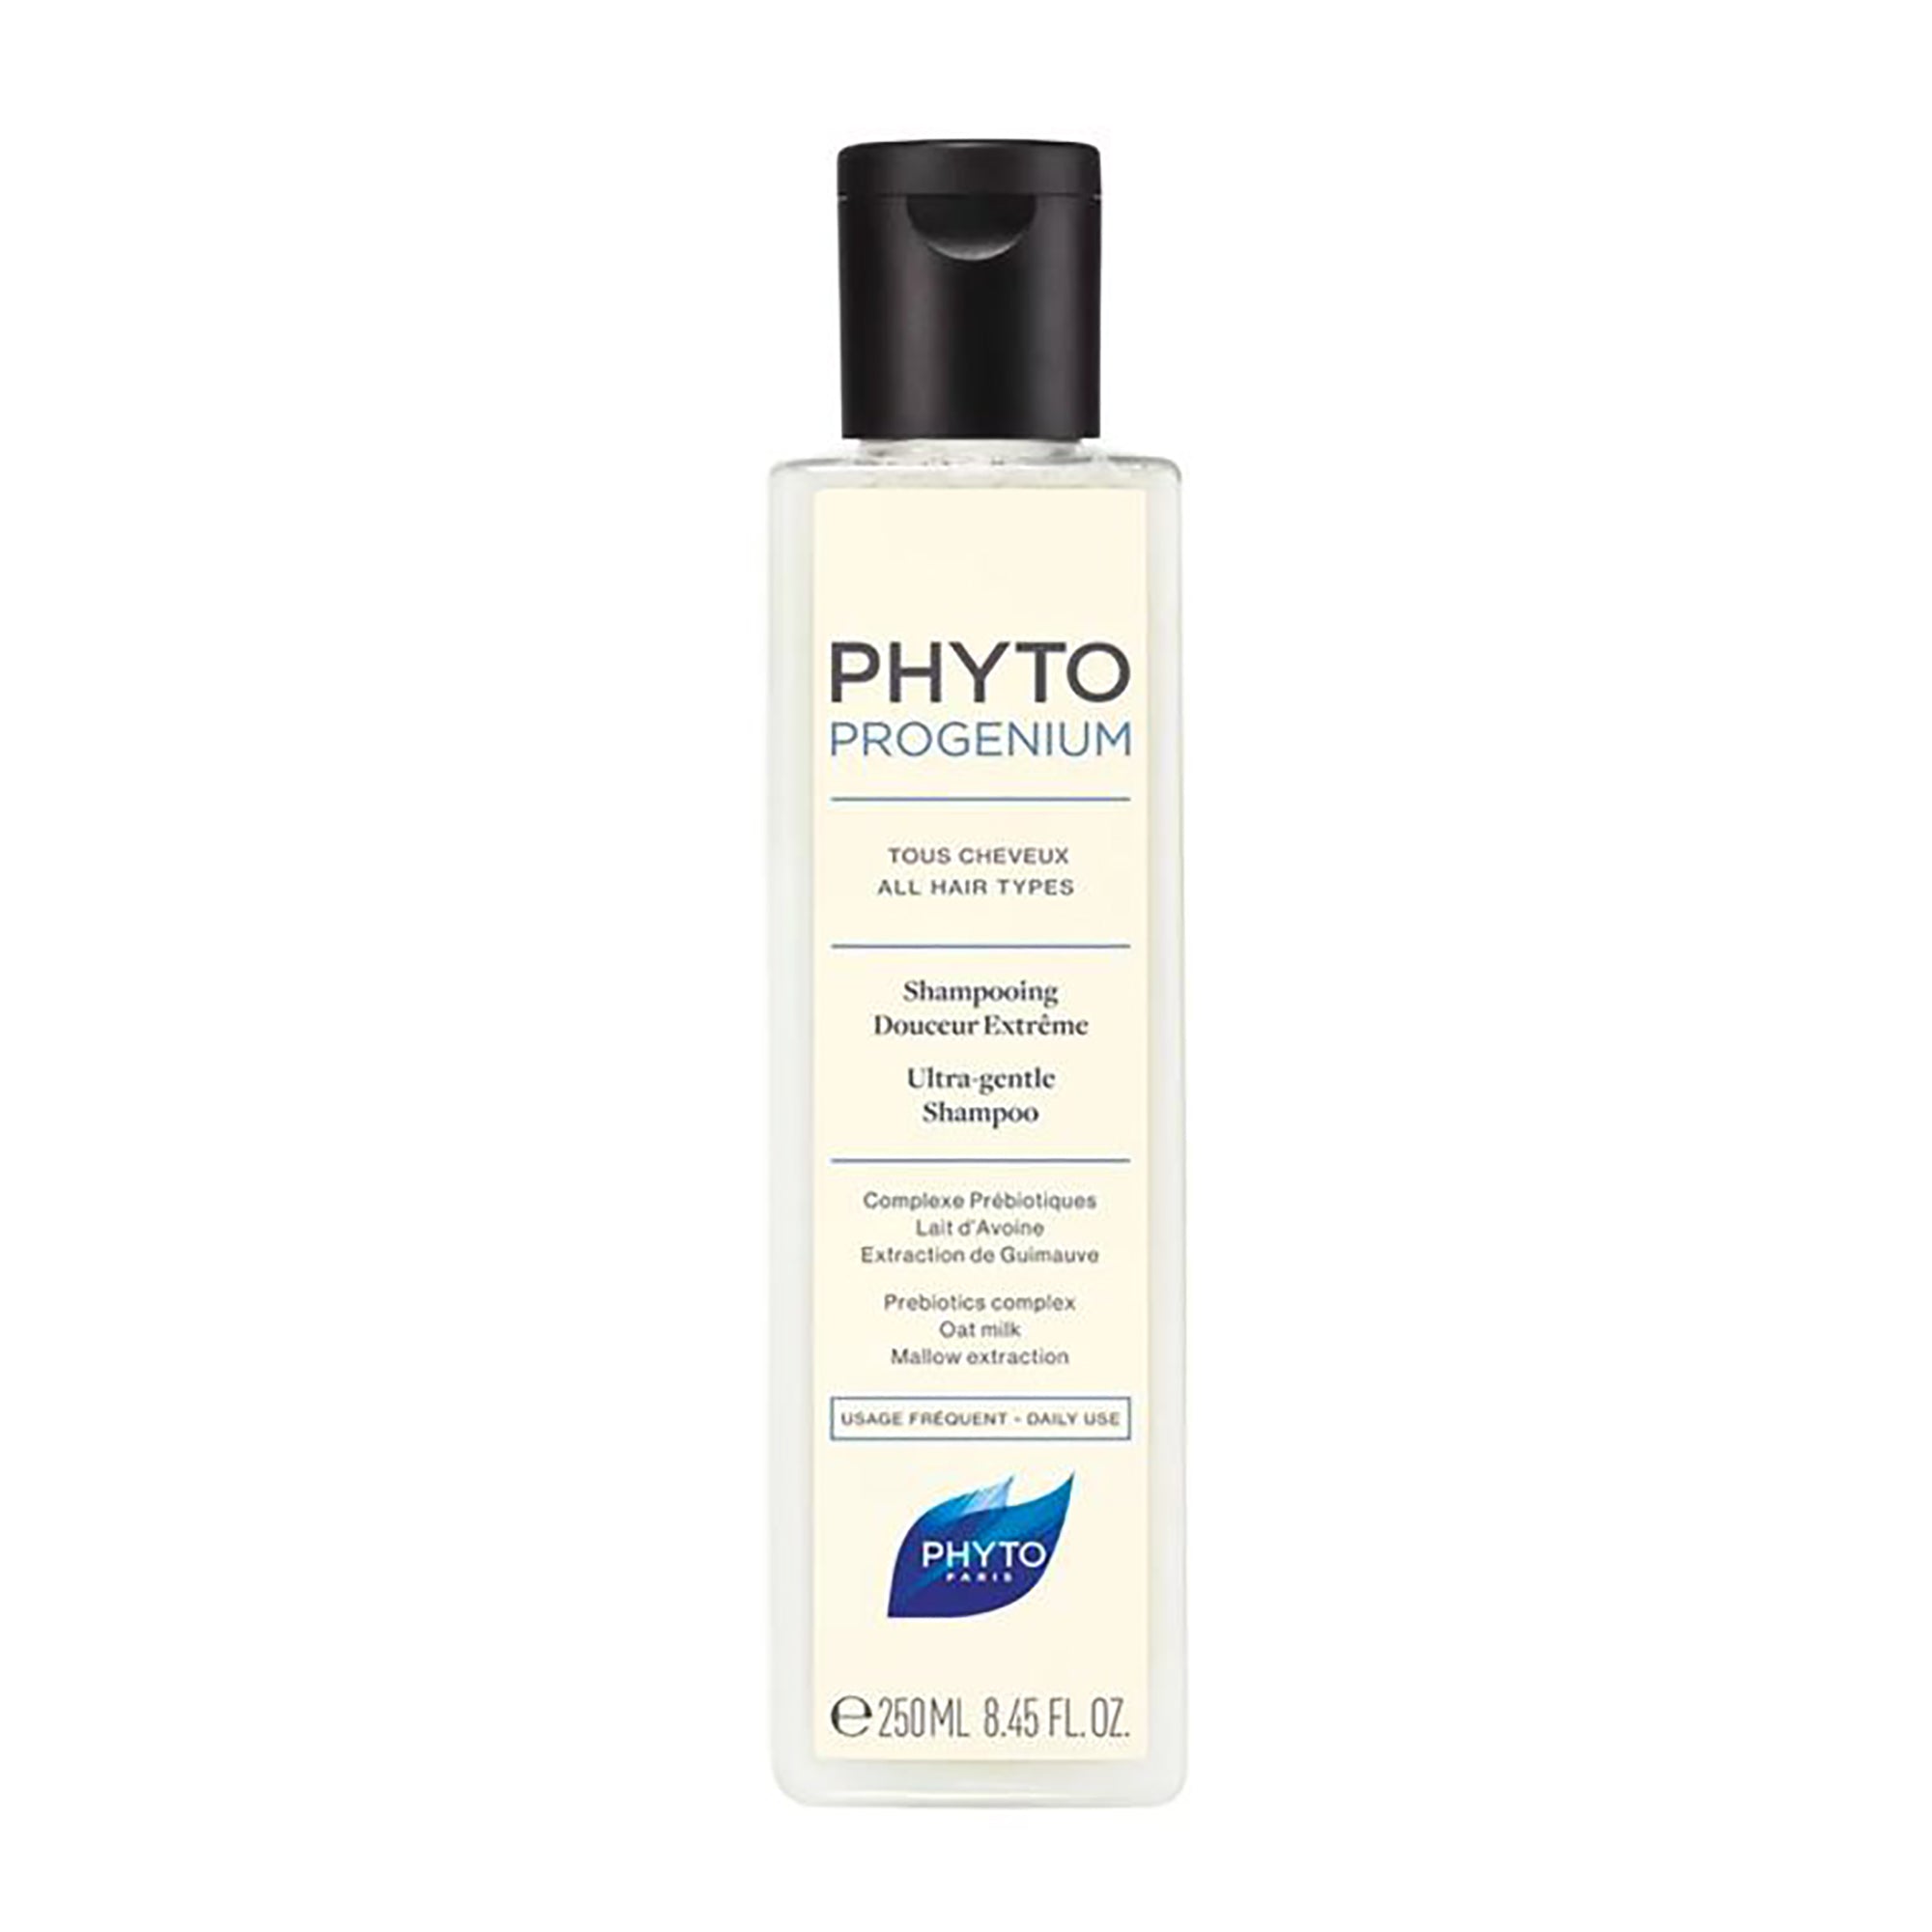 Phyto Progenium Ultra-gentle shampoo / 8.45